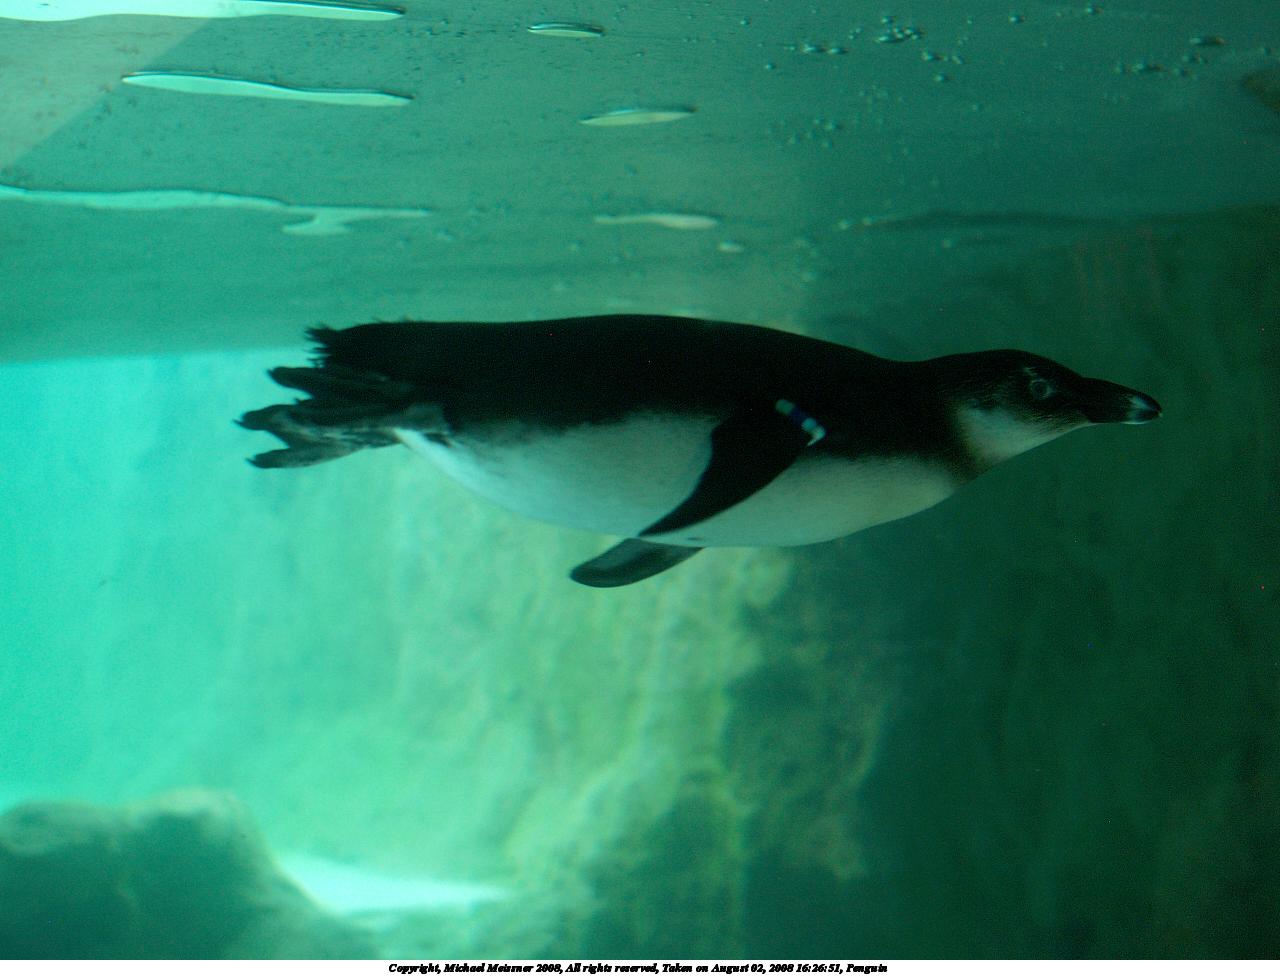 Penguin